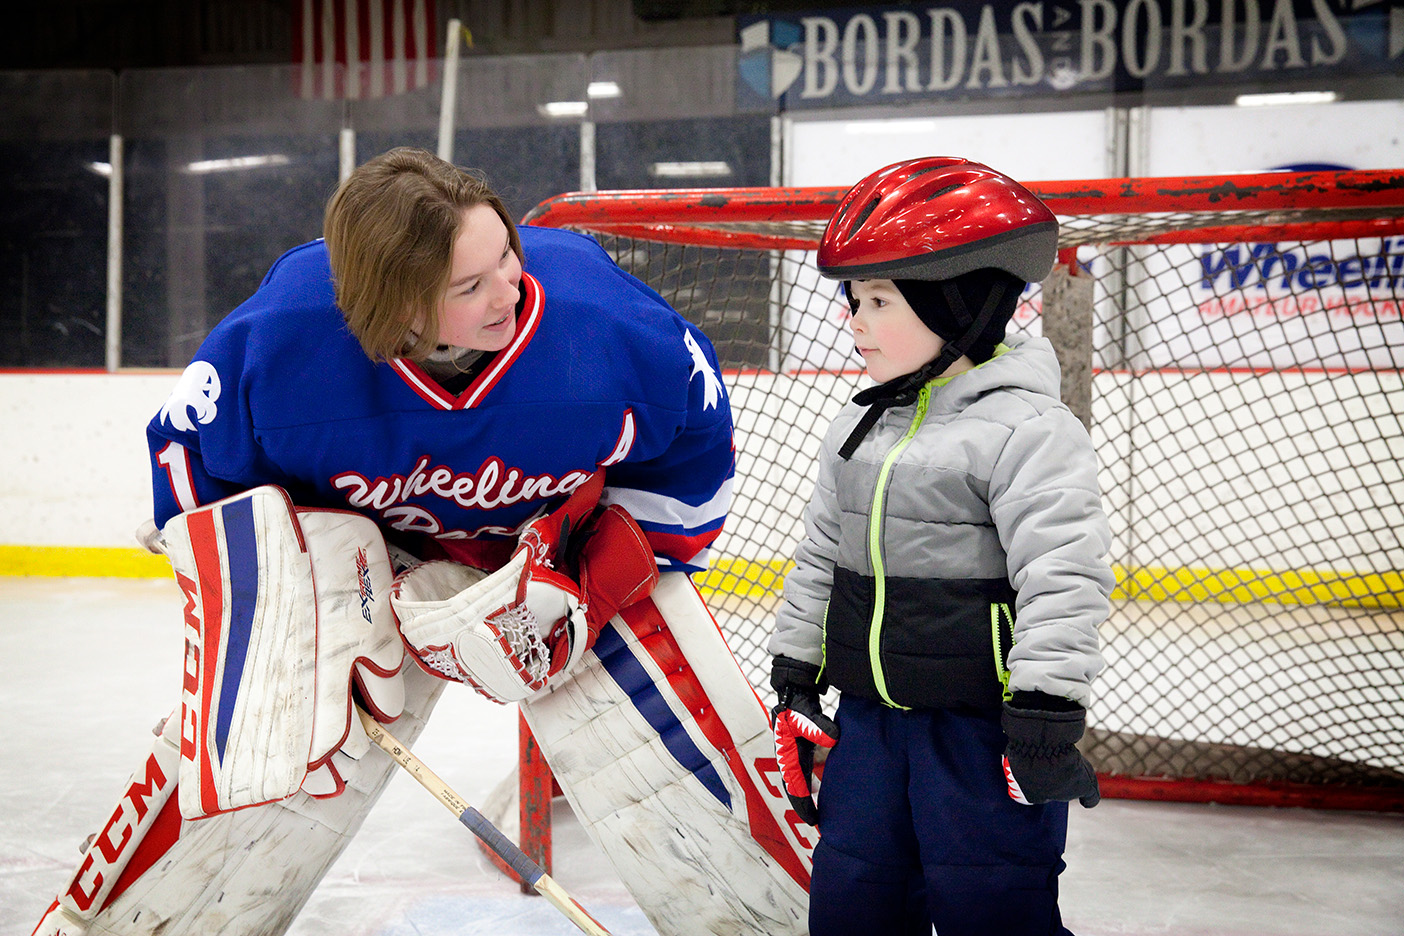 Hockey player helping child on ice